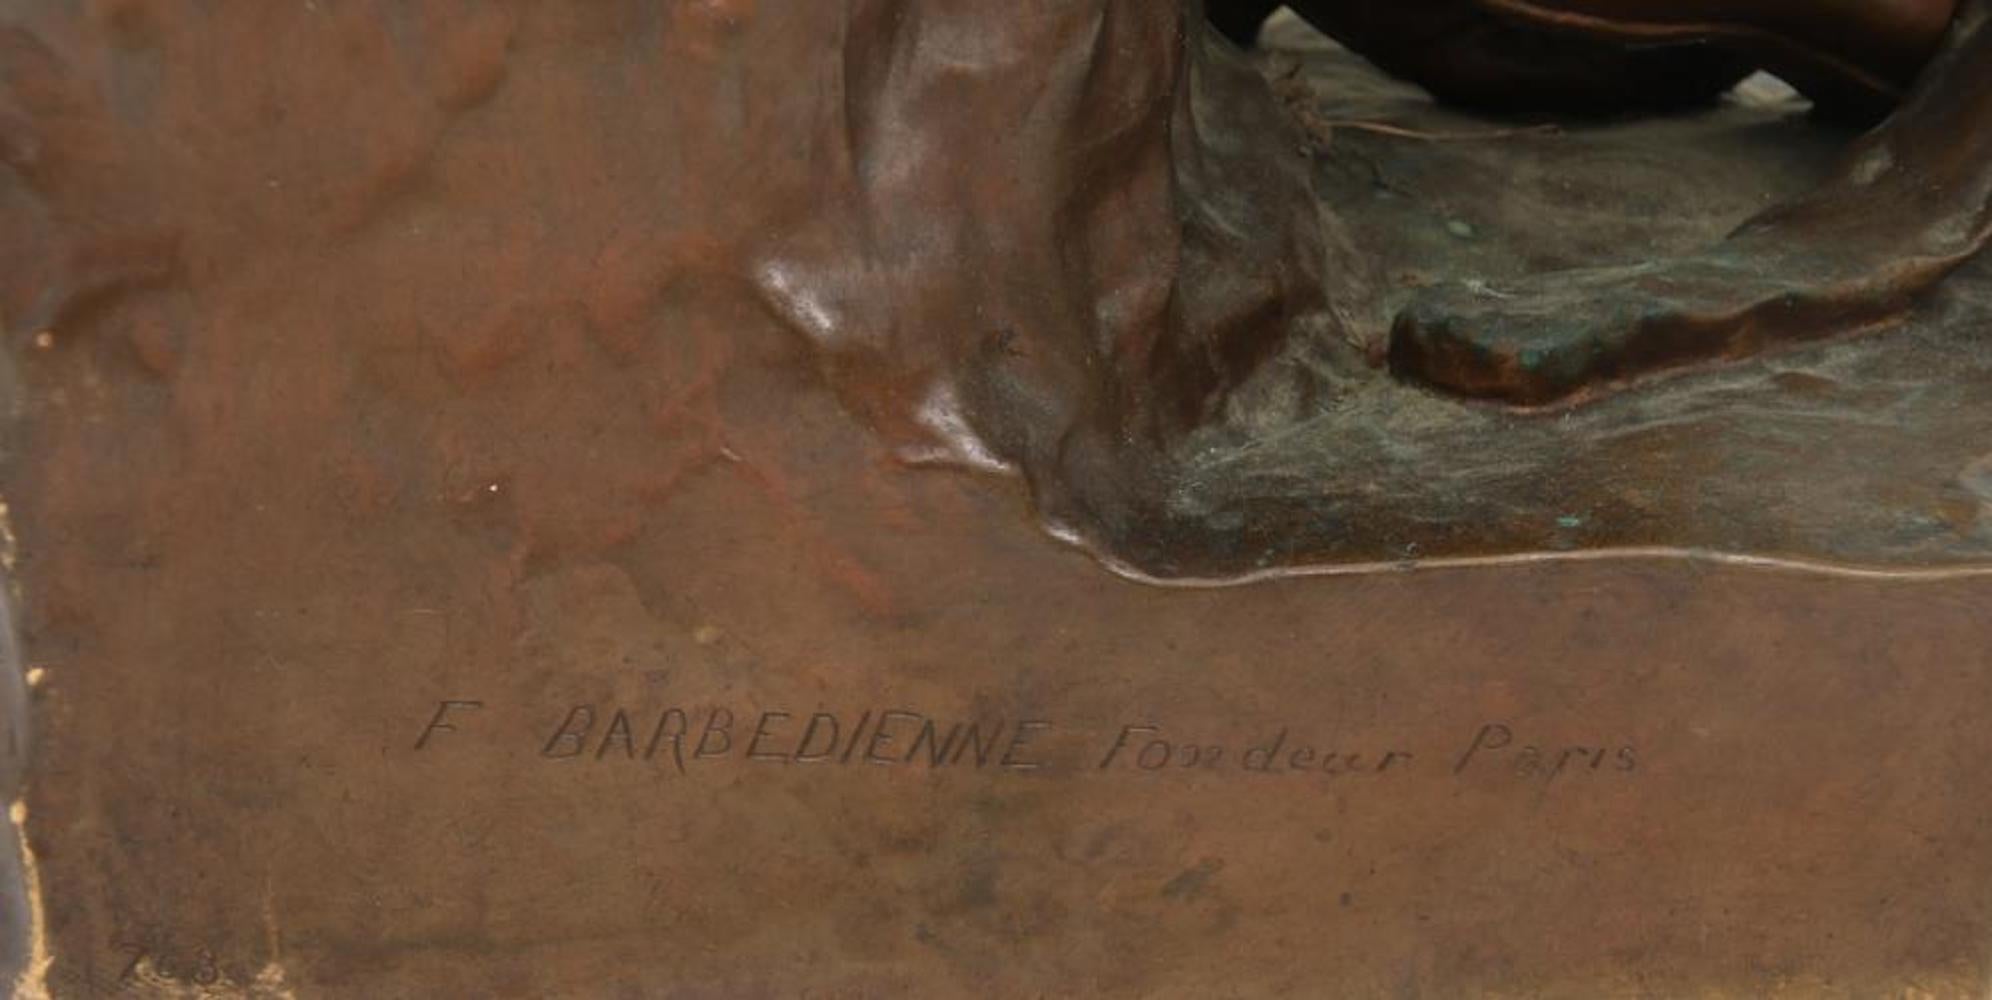 F. Barbedienne Bronze 